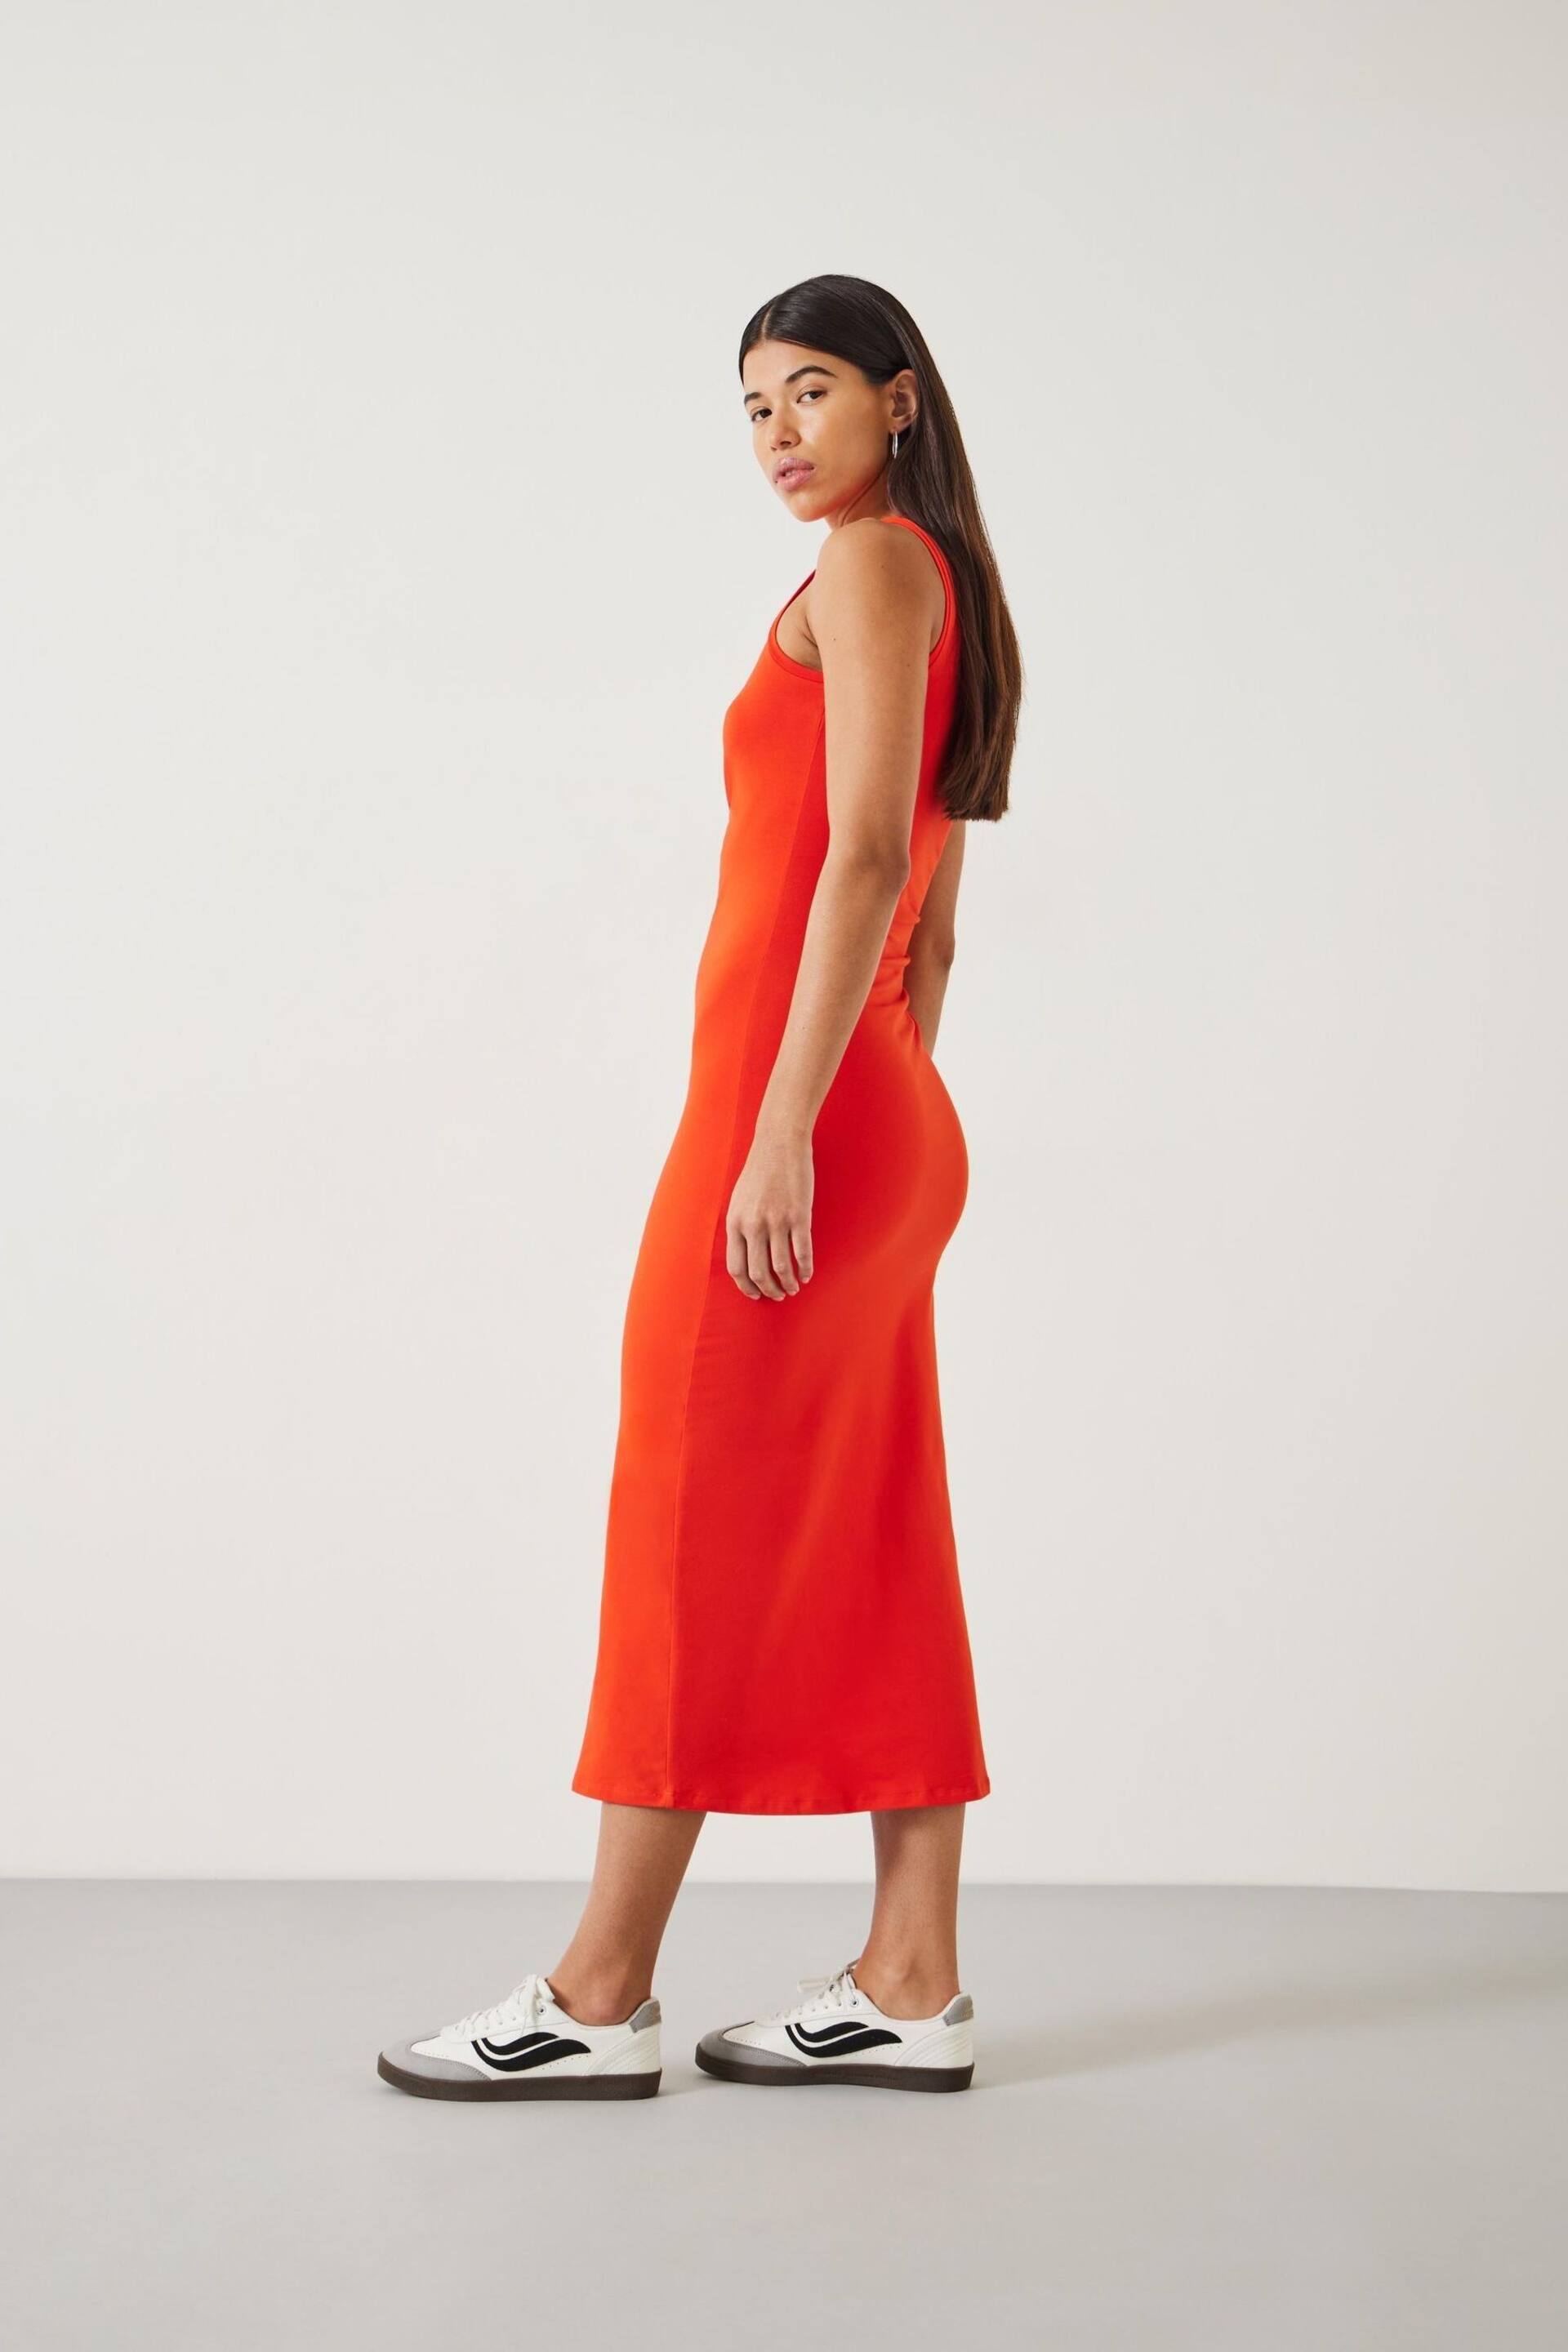 Hush Orange Sleeveless Judy Jersey Midi Dress - Image 4 of 4